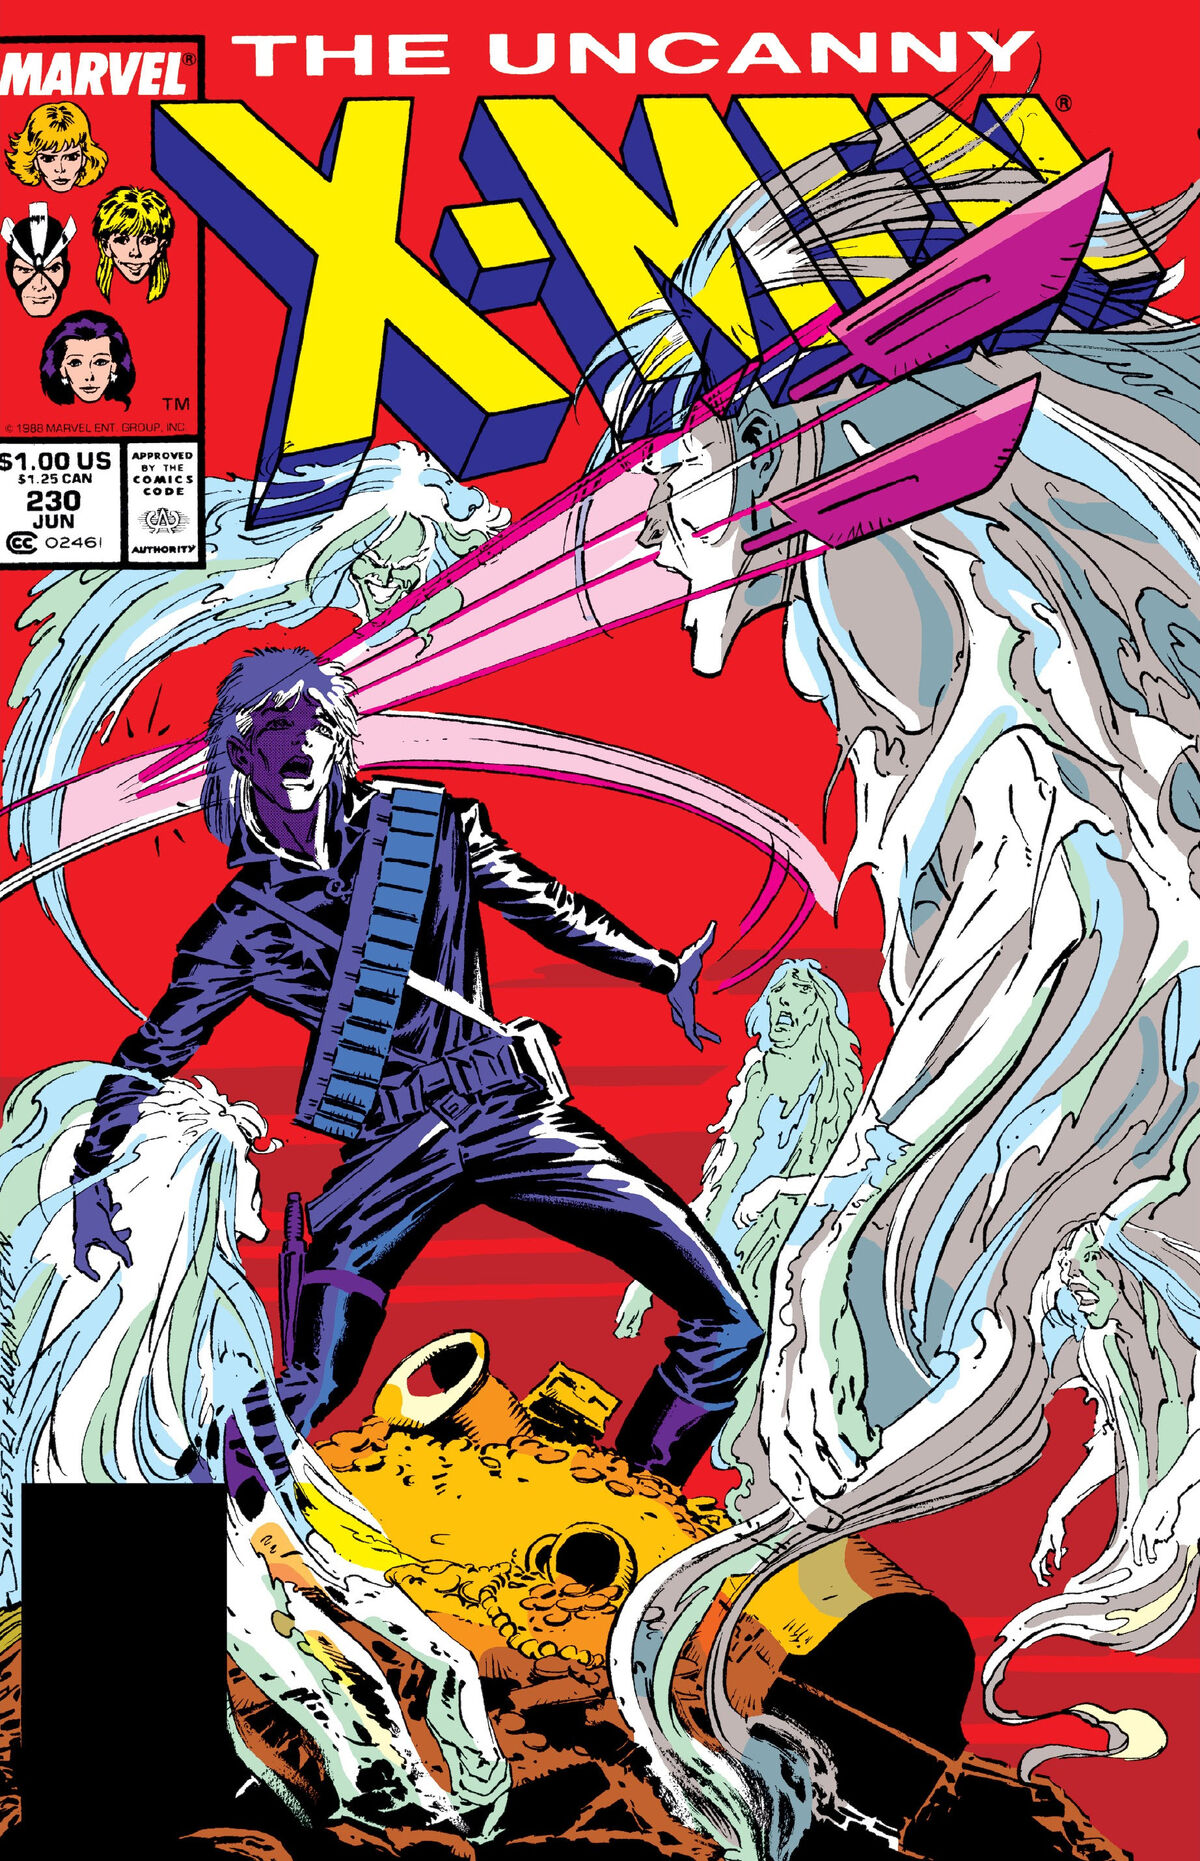 Uncanny X-Men Vol 1 230 | Marvel Database | Fandom